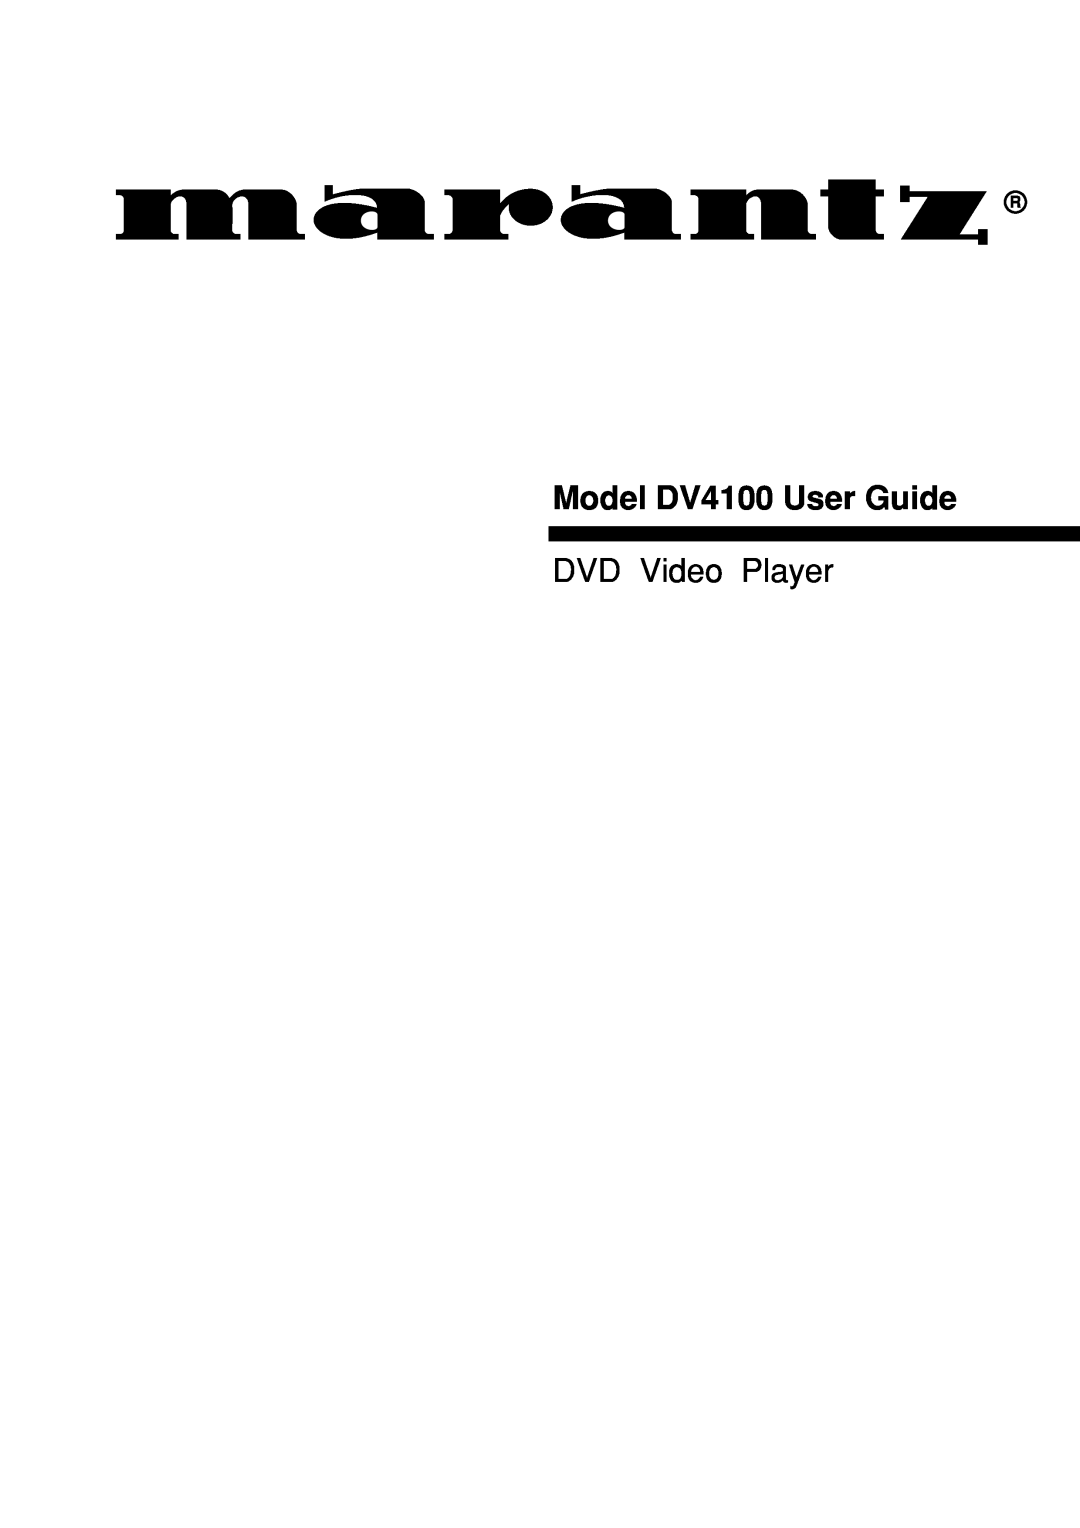 Marantz manual Model DV4100 User Guide, DVD Video Player 